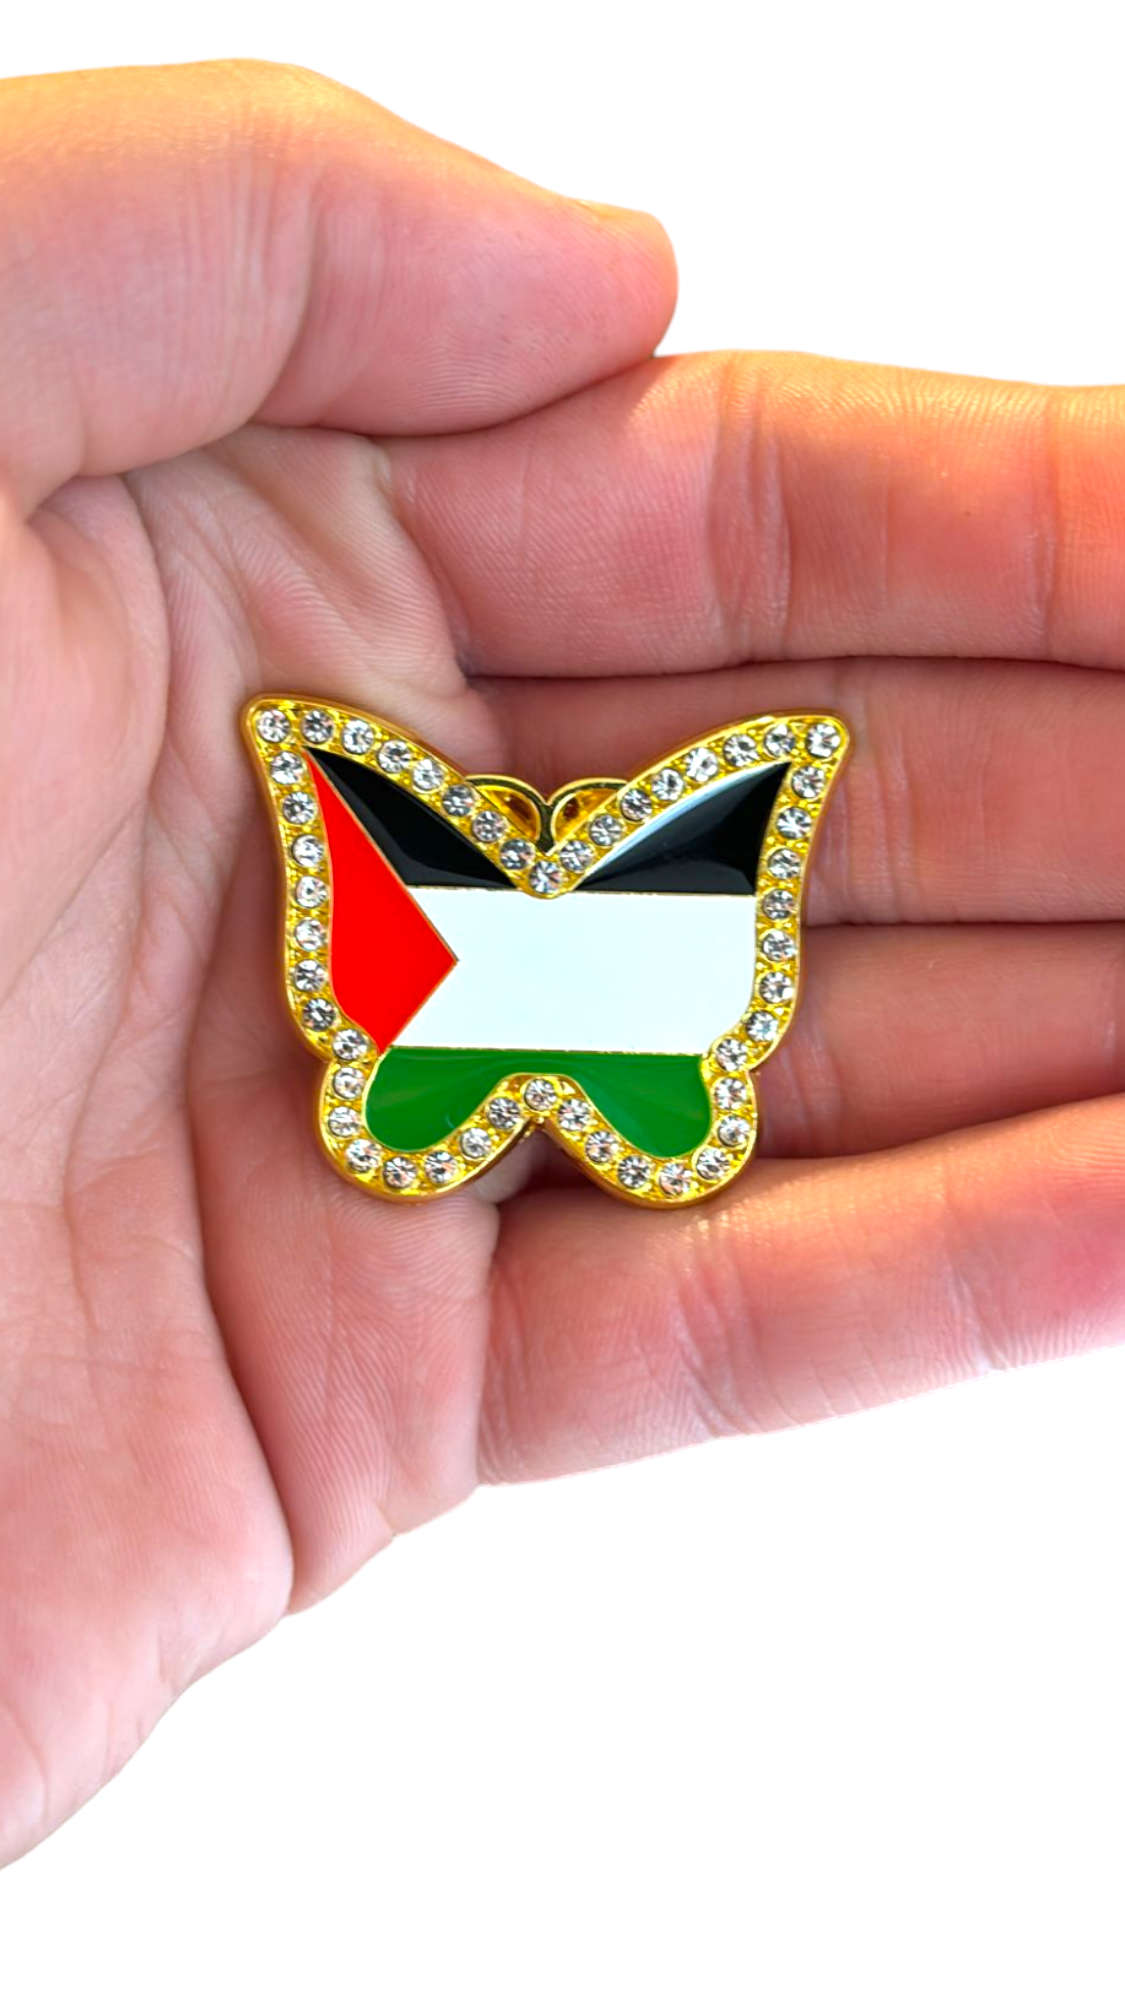 Palestine Flag Pin Lapel Stainless Steel Keffiyeh Handala